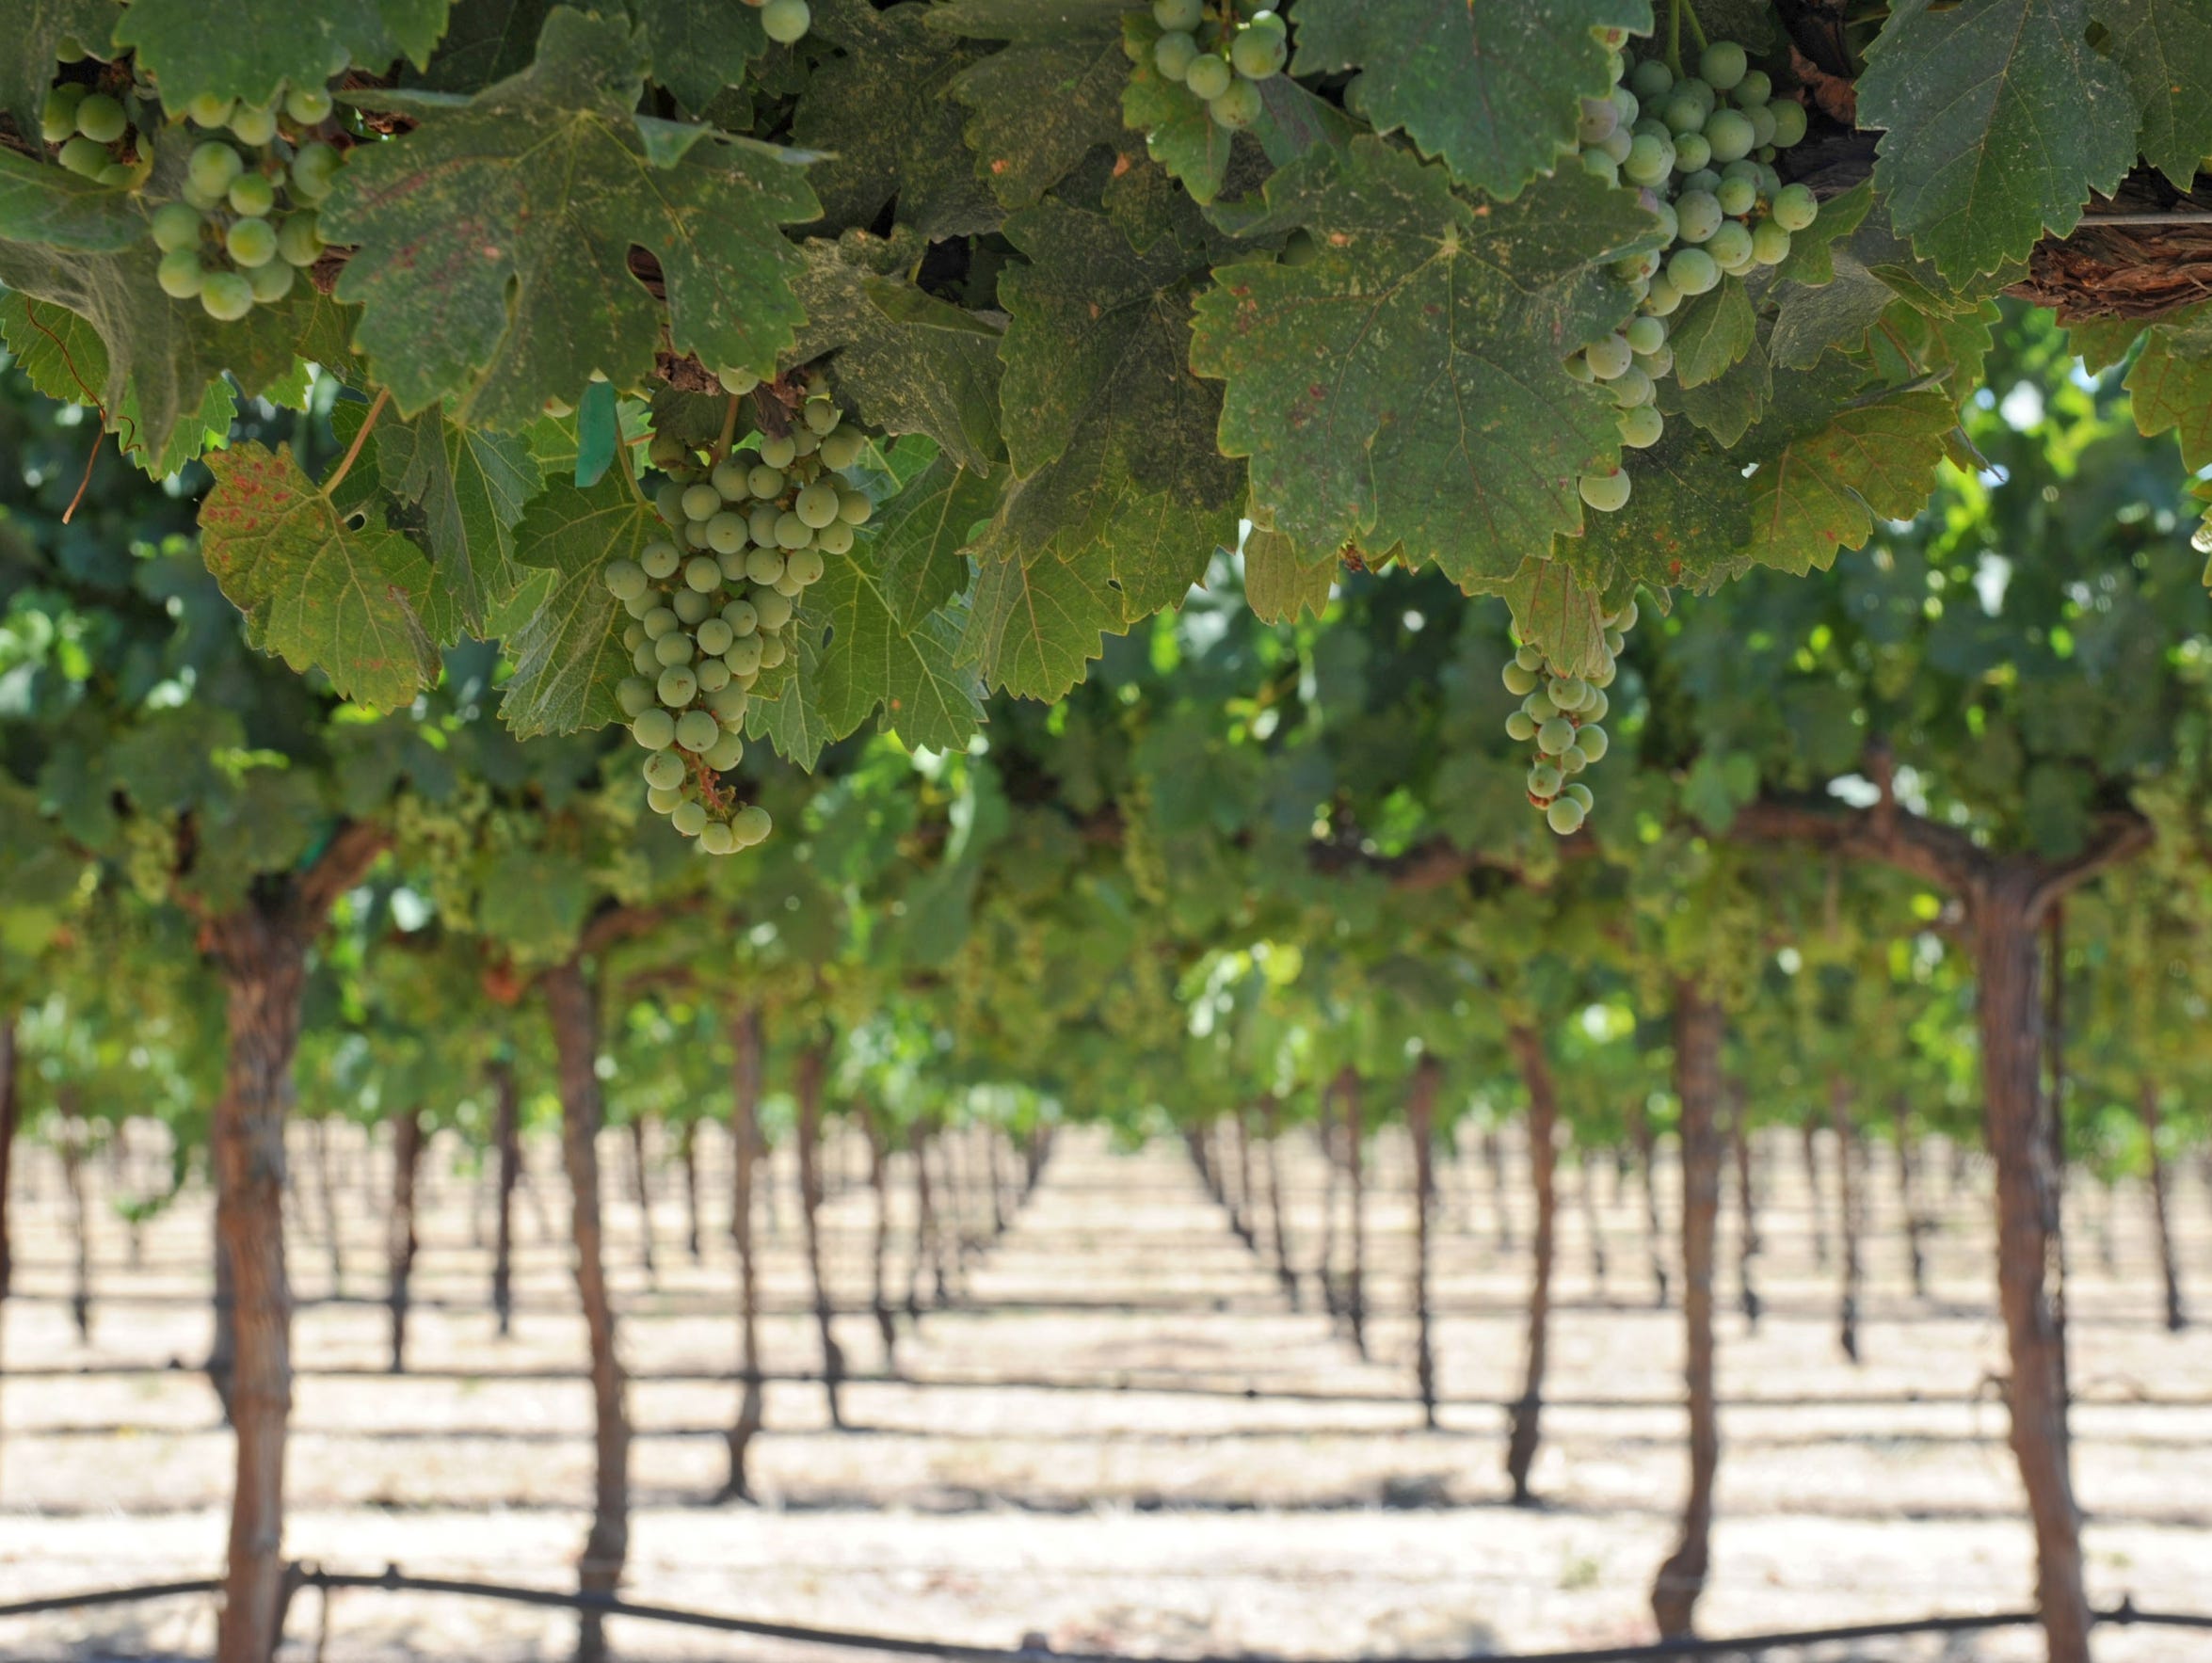 Wine grapes hang on the vines at Pomar Junction Vineyard